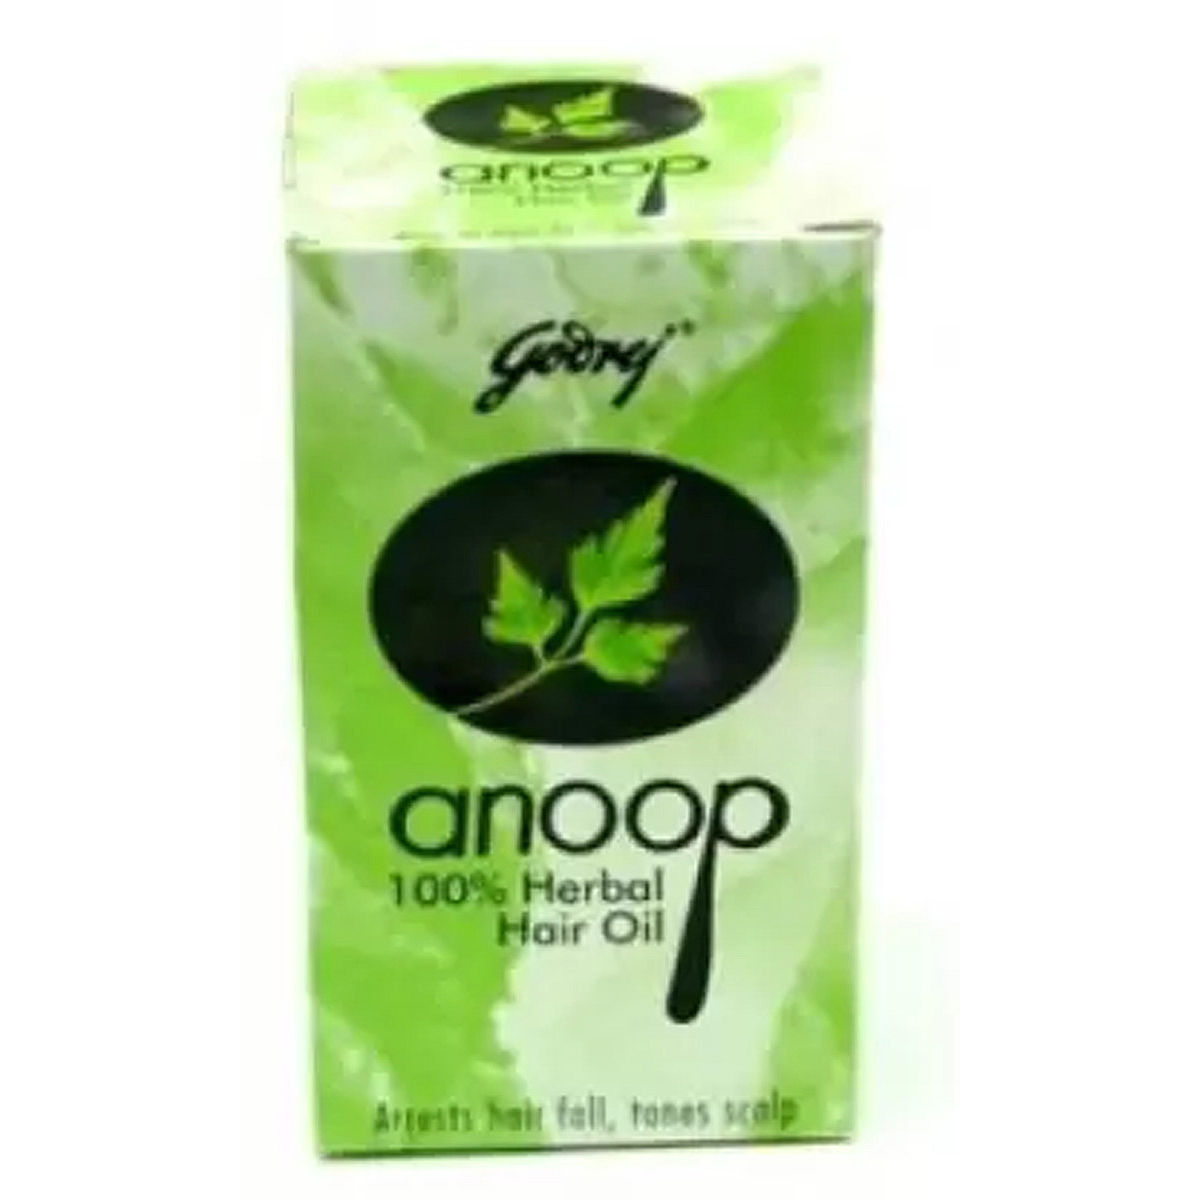 Godrej Anoop herbal hair oil helps control hairfall India  Ubuy